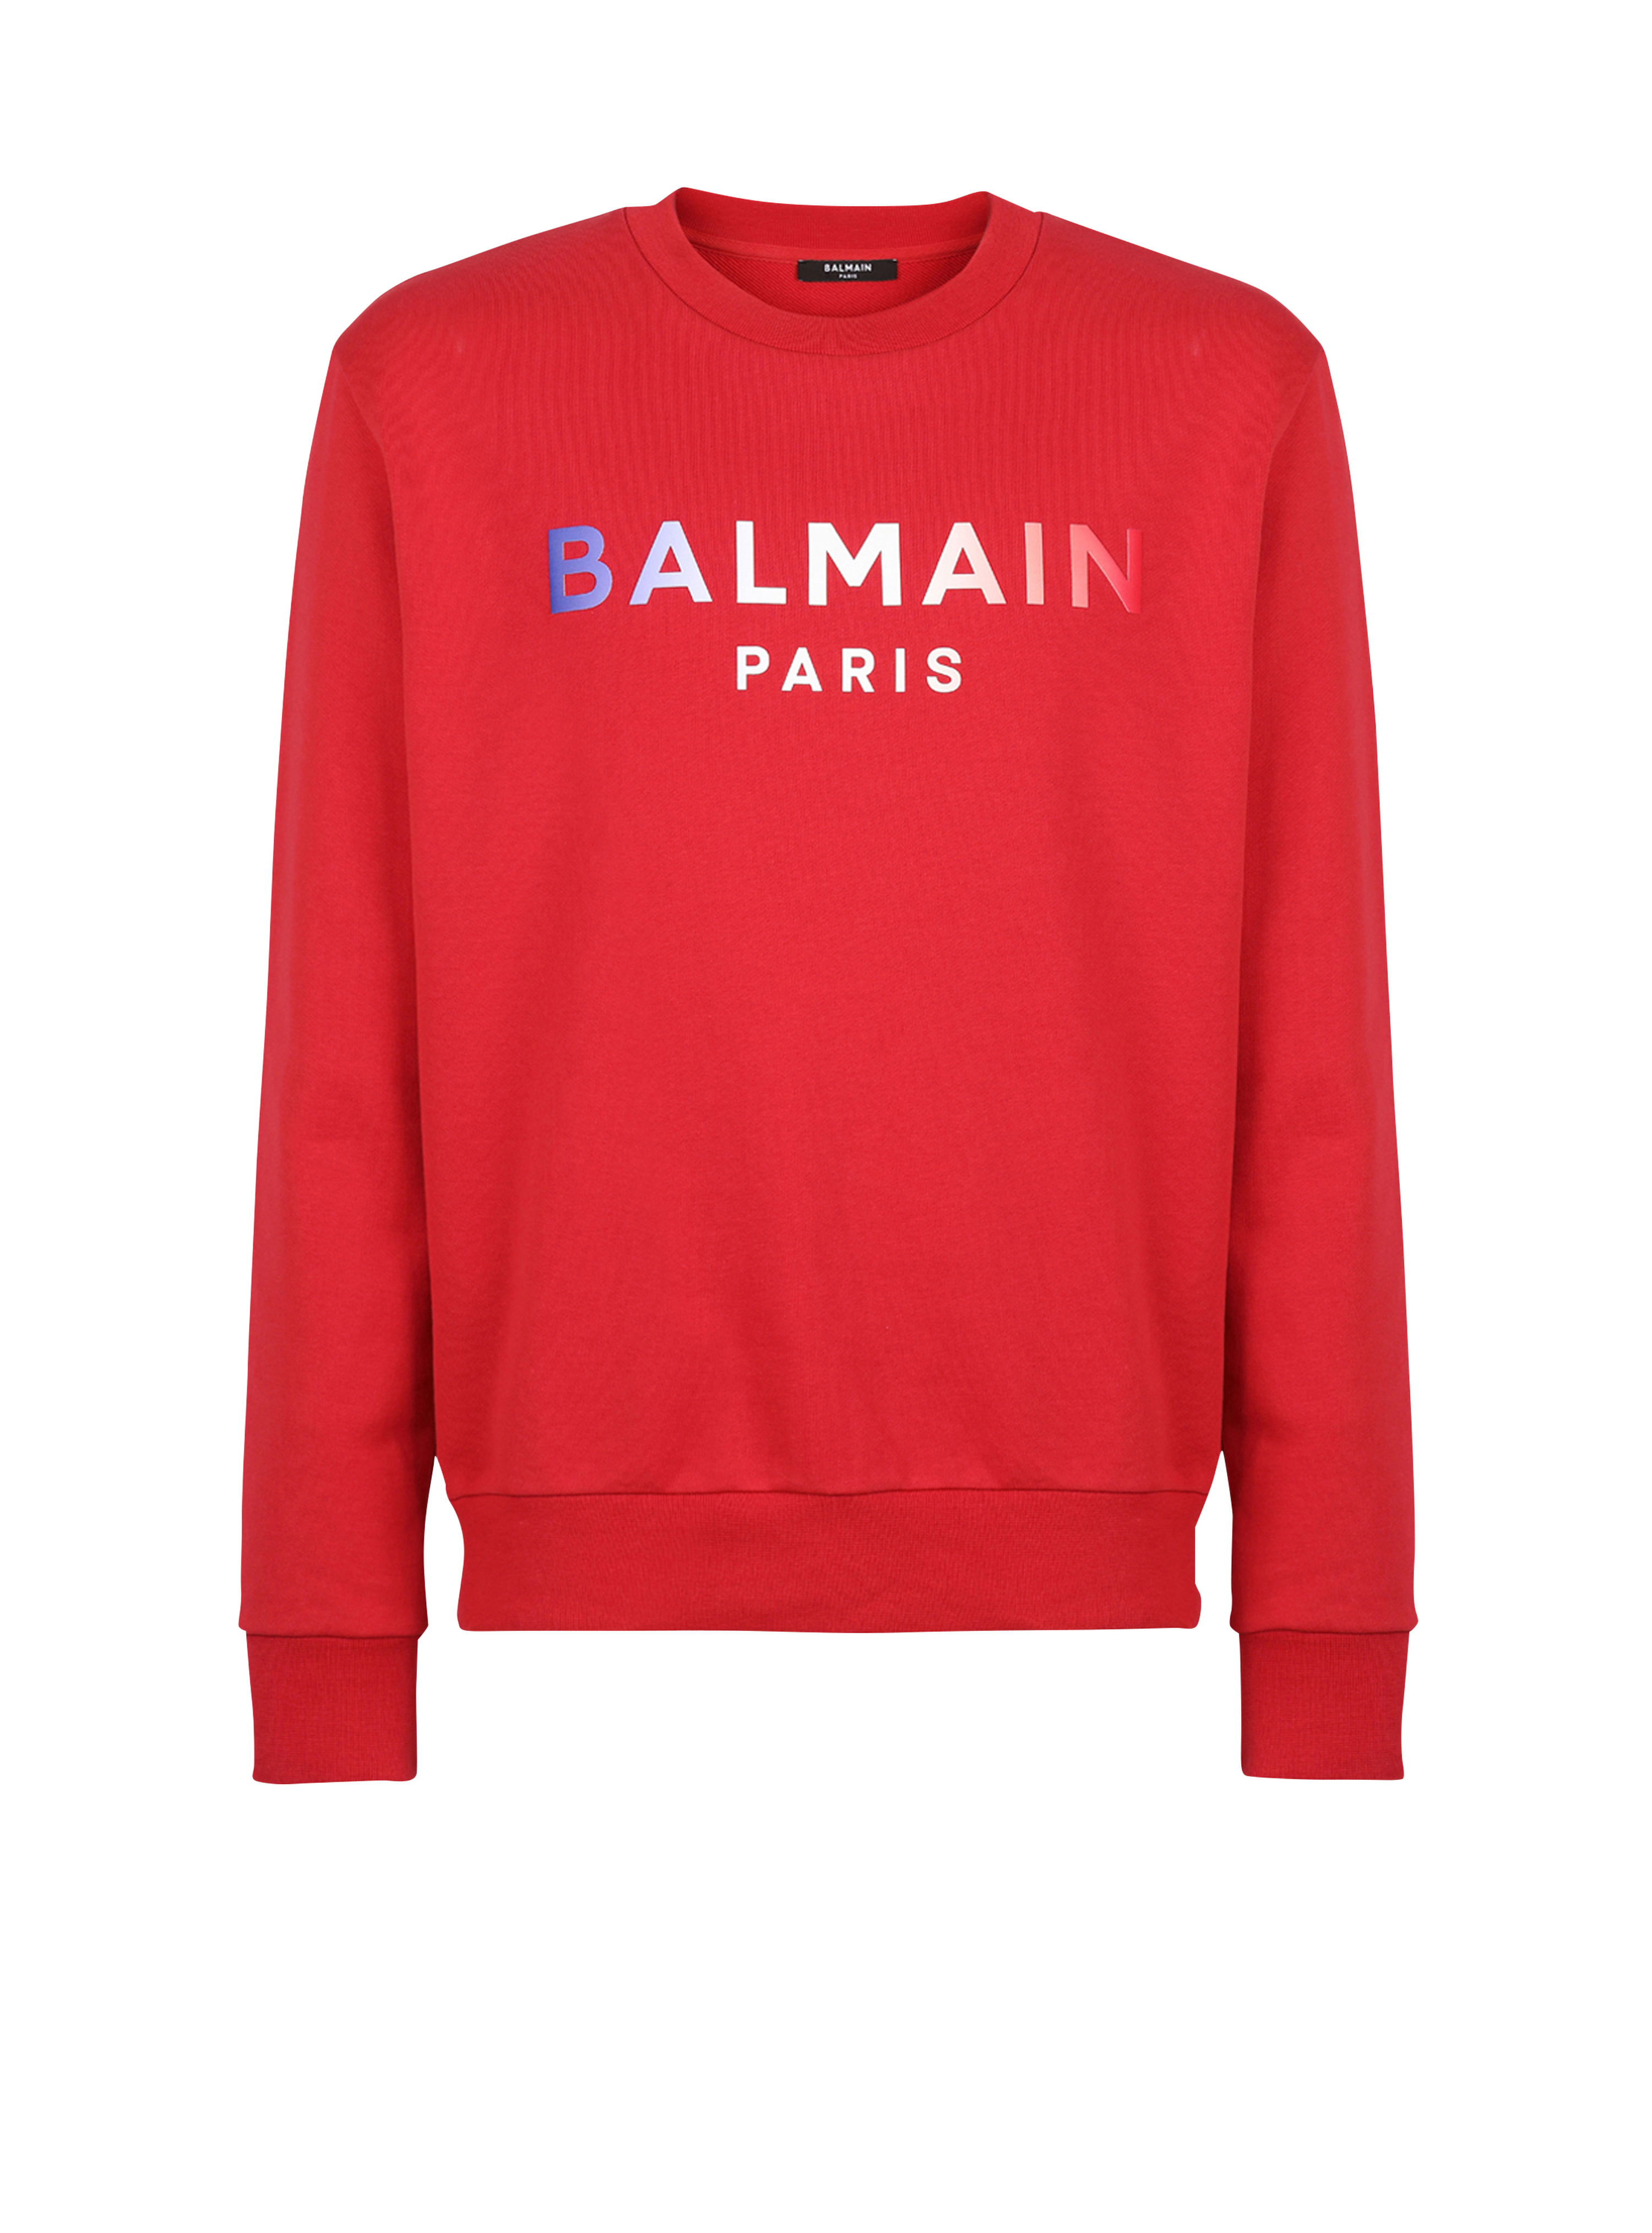 HIGH SUMMER CAPSULE - Sweat en coton imprimé tie and die logo Balmain Paris, rouge